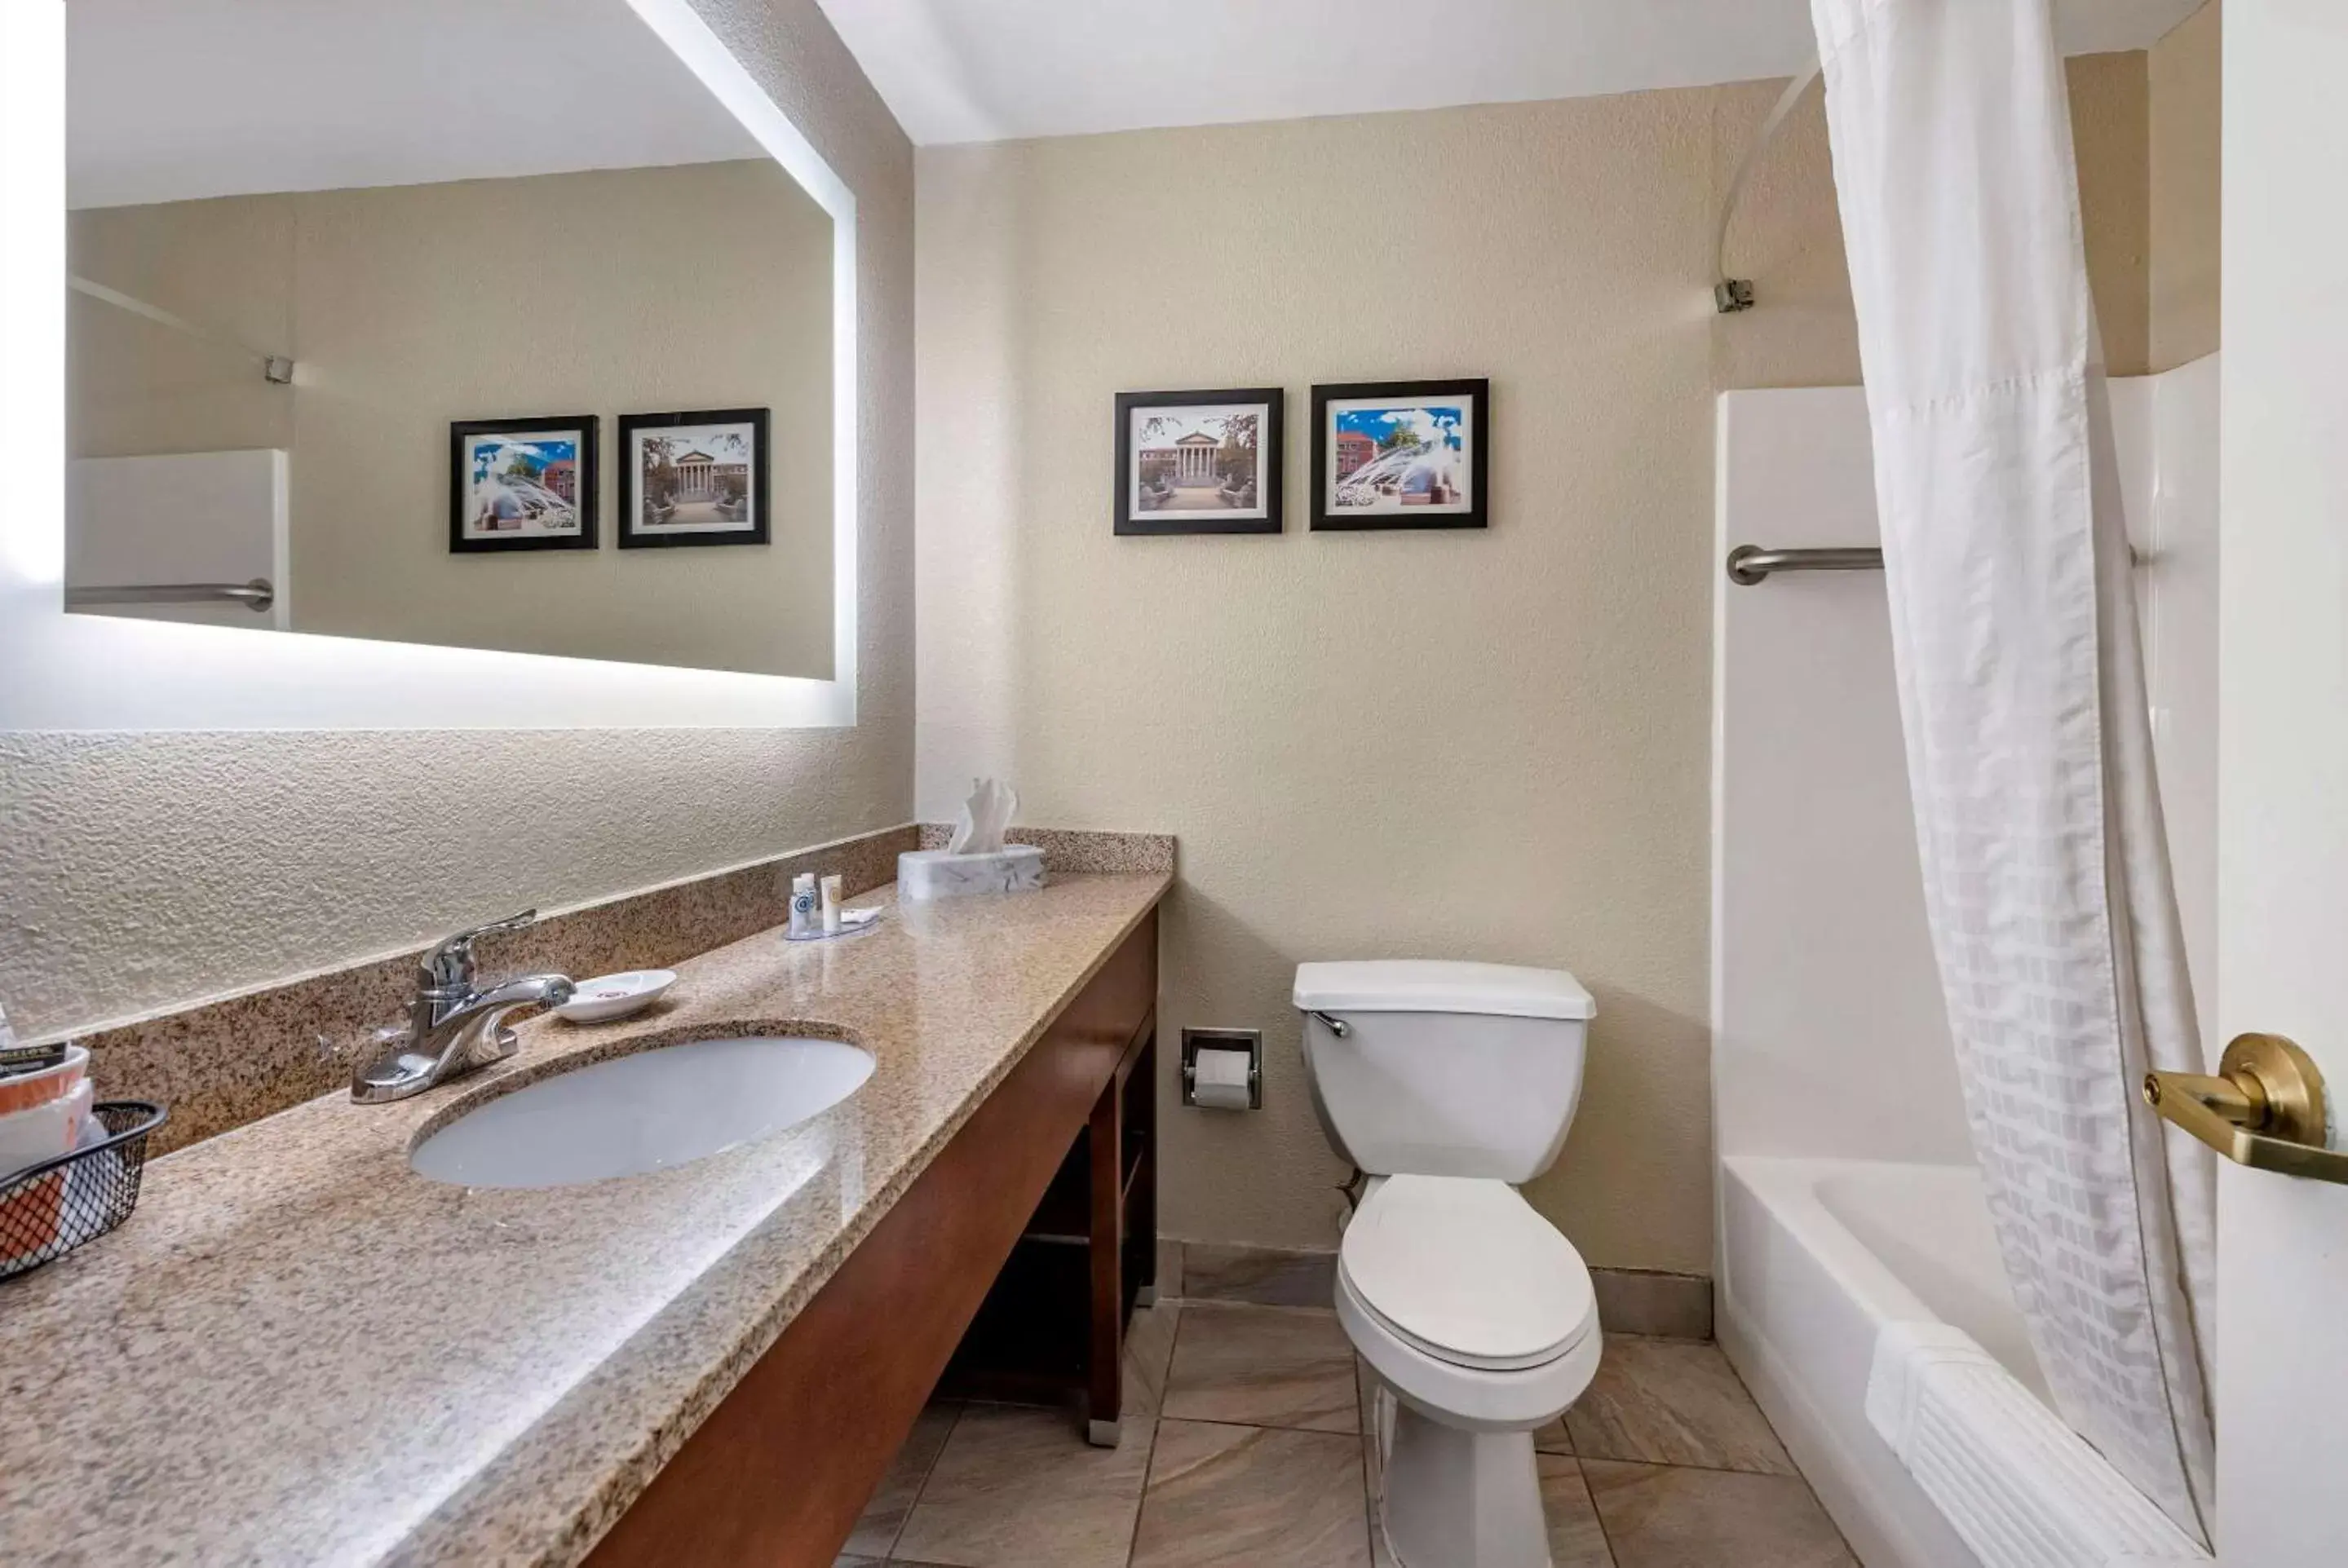 Photo of the whole room, Bathroom in Comfort Inn Lafayette I-65